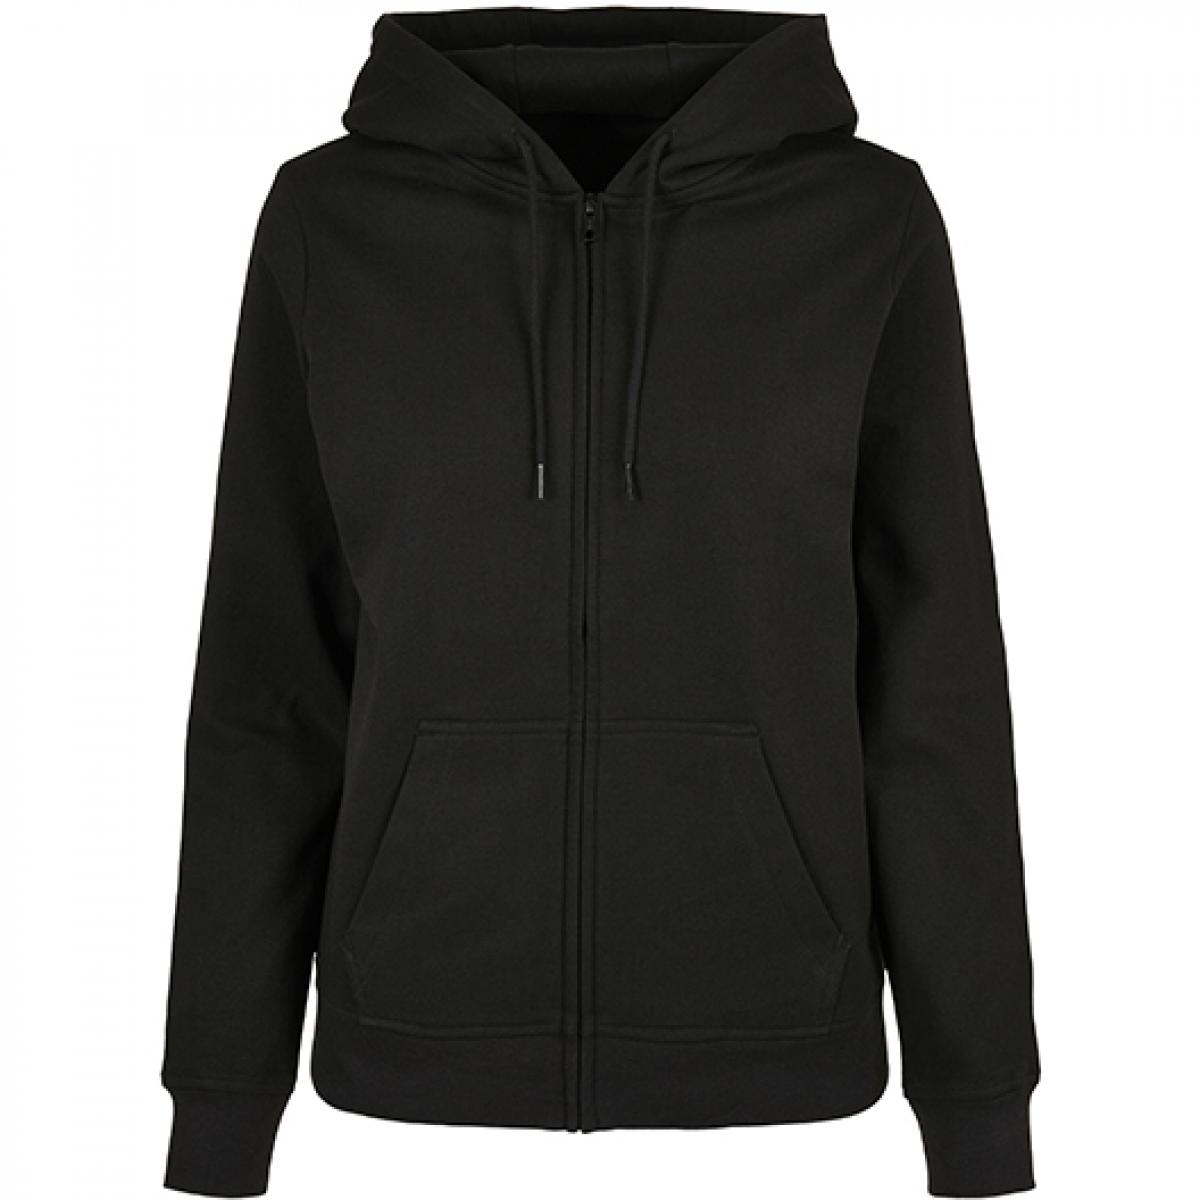 Ladies Basic Zip Hoody - Damen Kapuzen Sweatjacke Farbe Black Größe XS